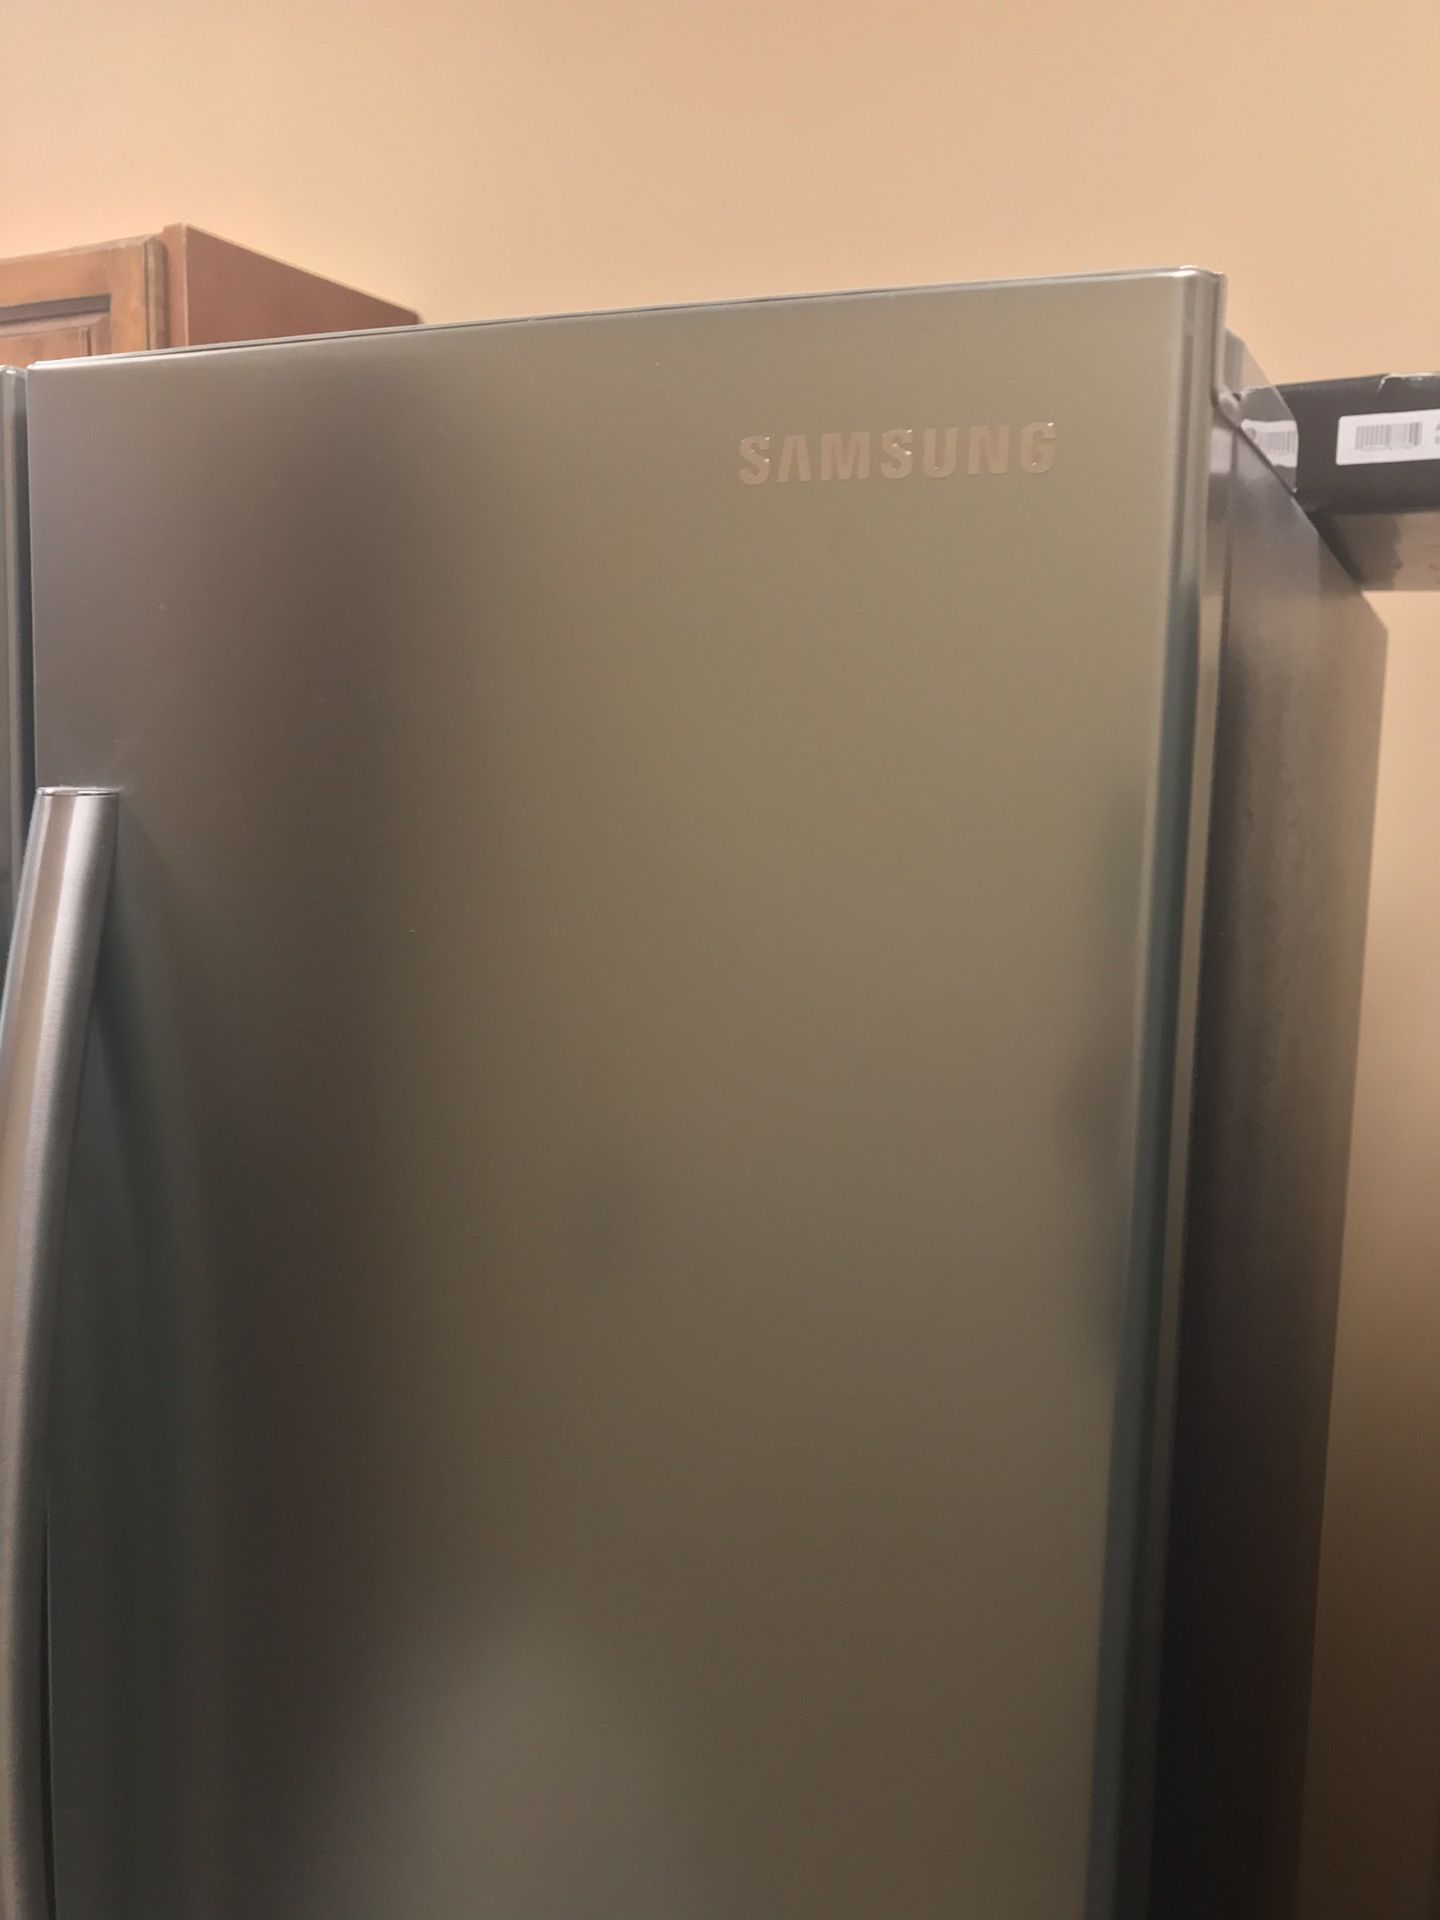 Refrigerator Samsung fridge and freezer